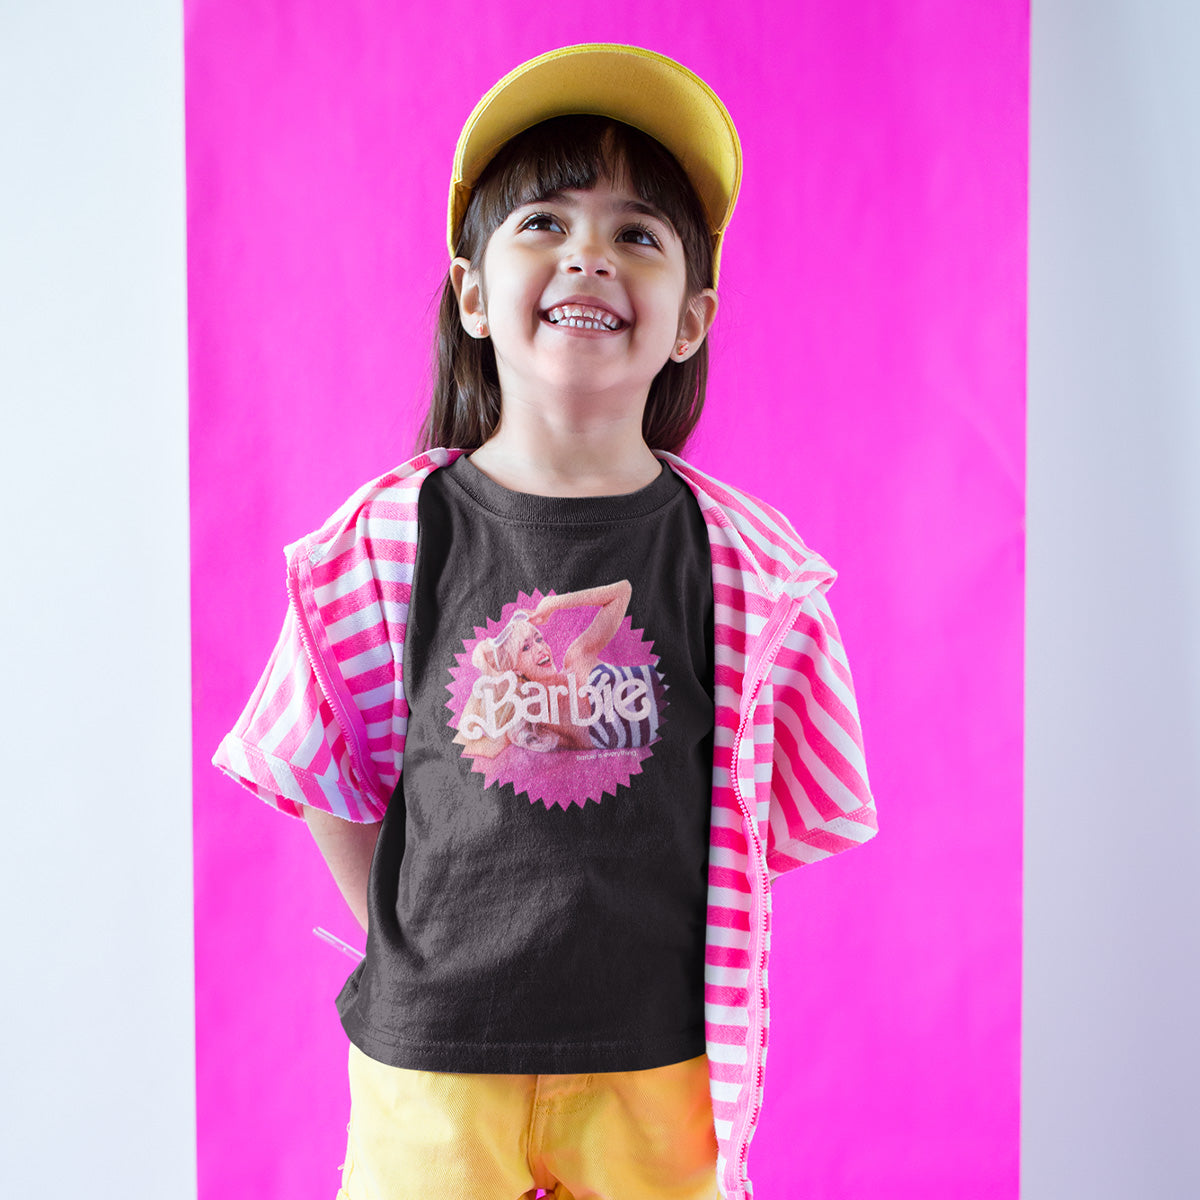 Barbie Movie T-Shirt for Kids - Margot Robbie Inspired Design